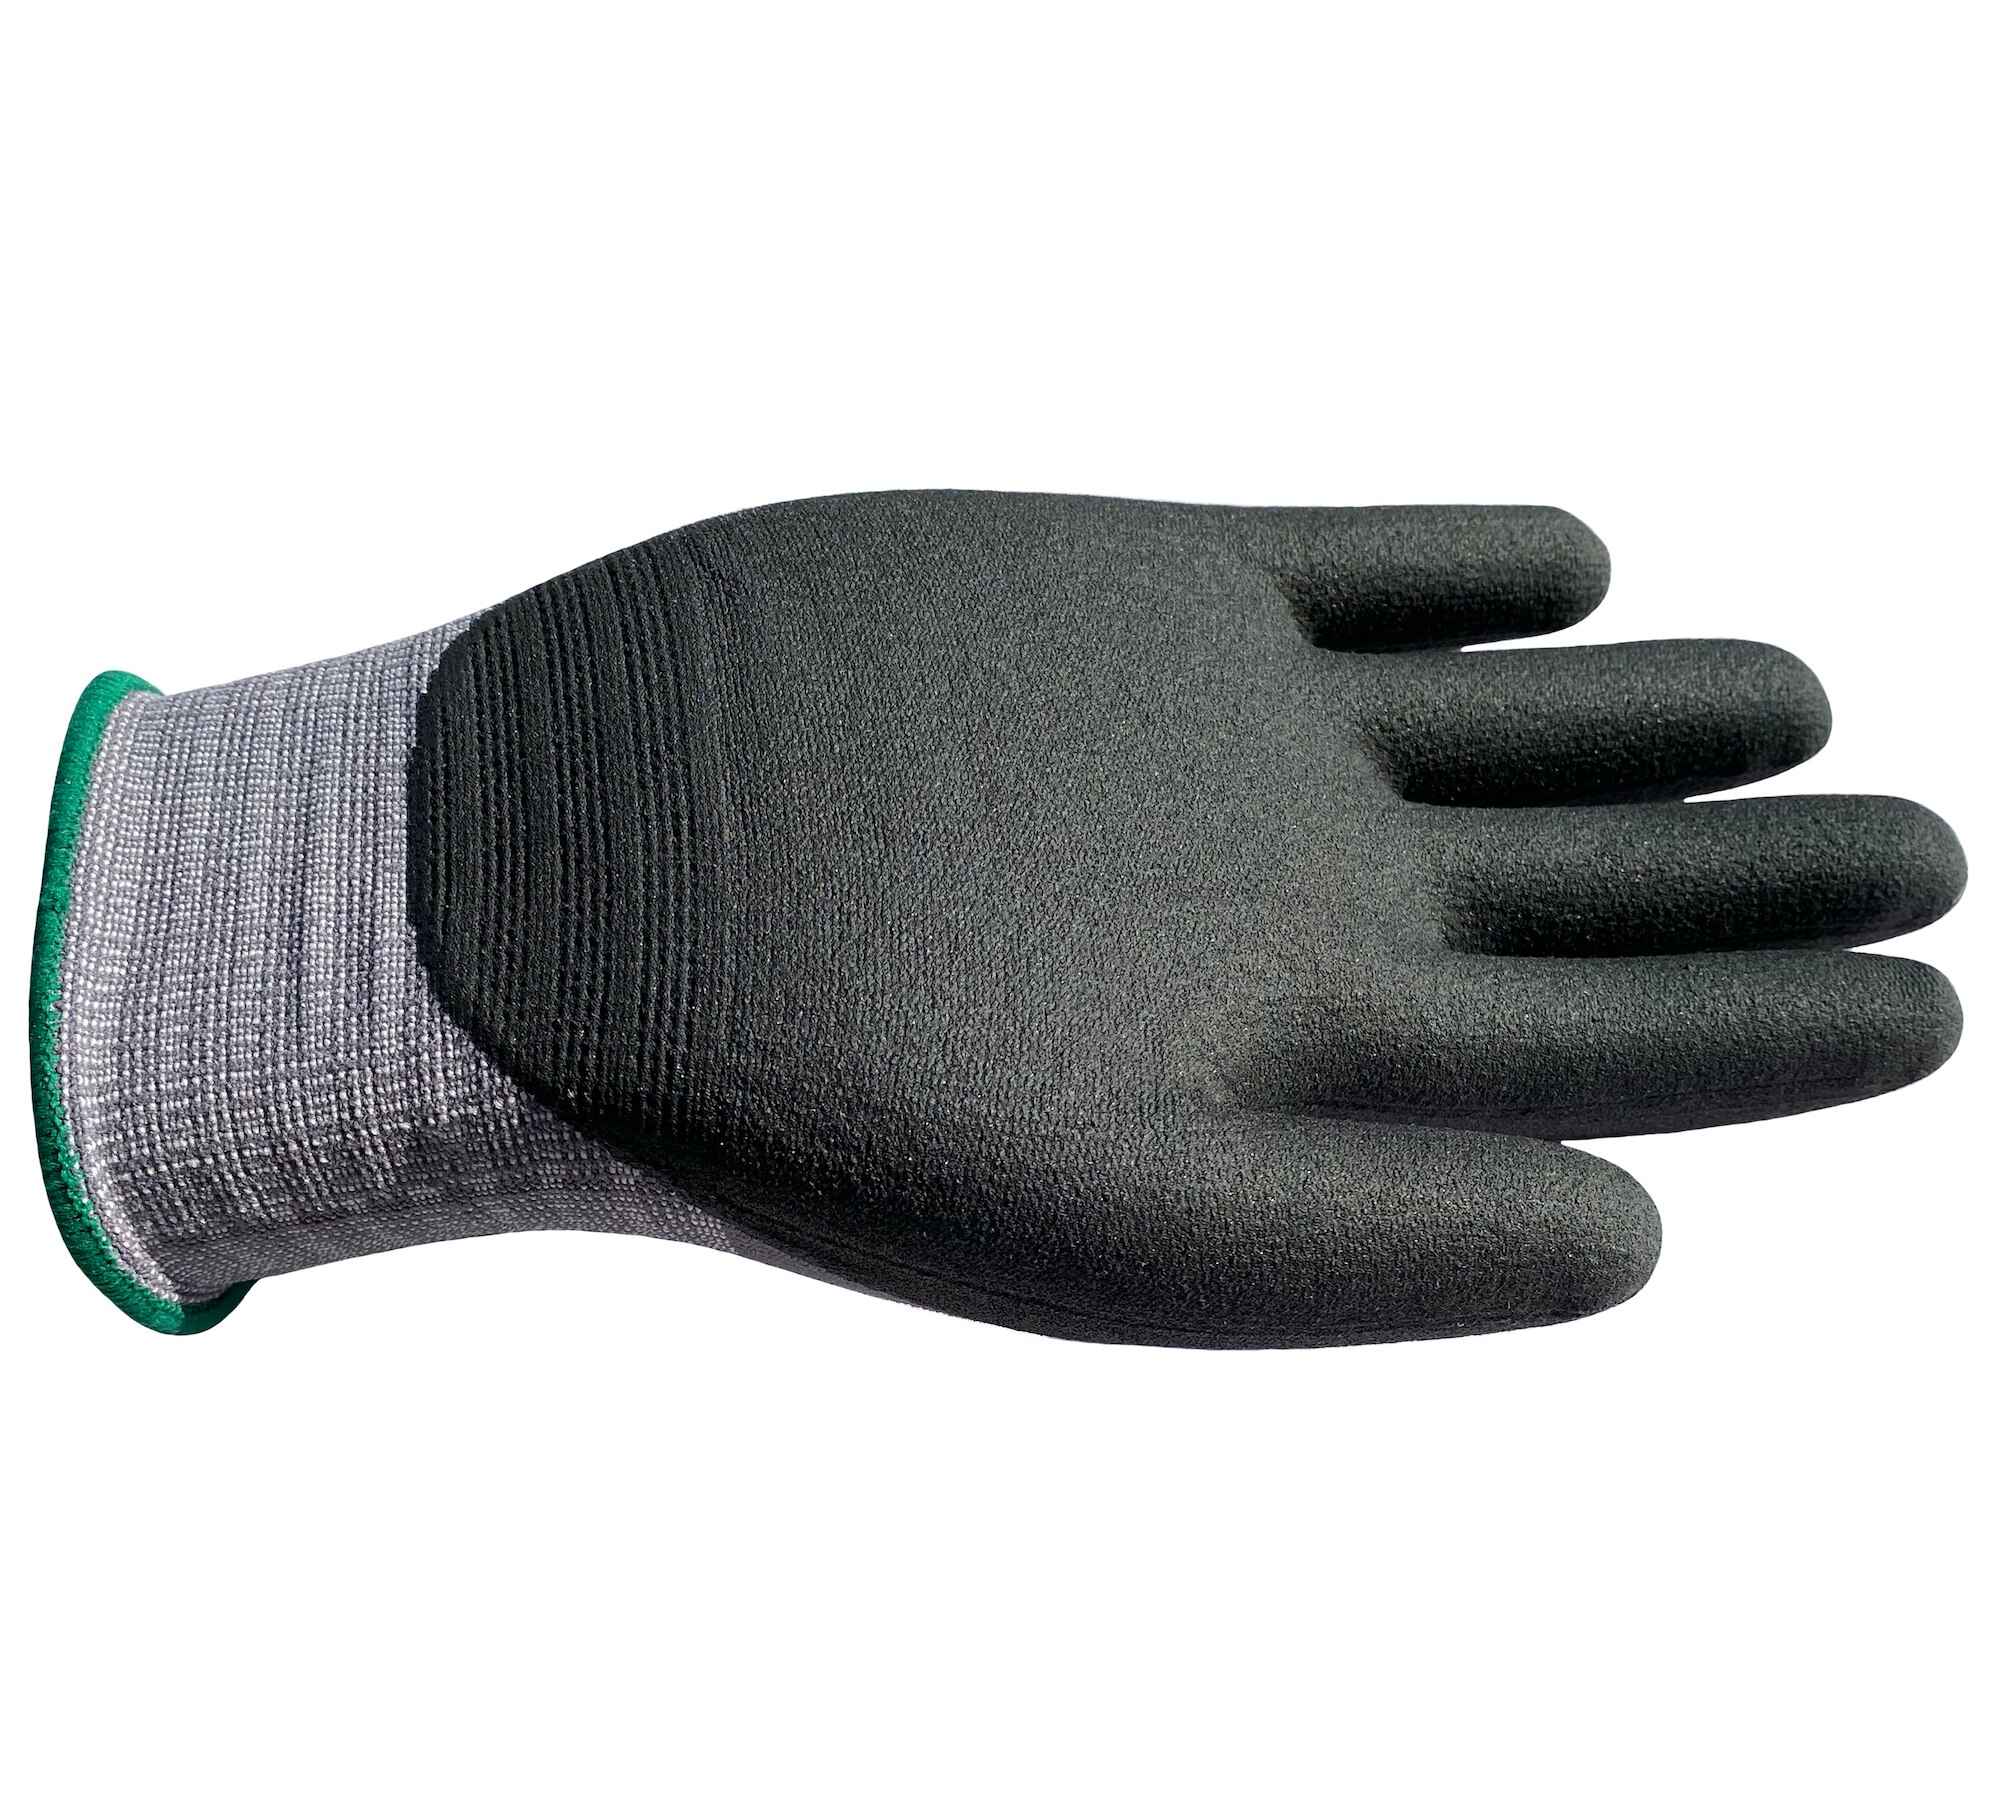 Oil And Gas NJ506 High Flex Safety Nitrile Foam Maxi Abrasion Resistant Gardening Work Gloves